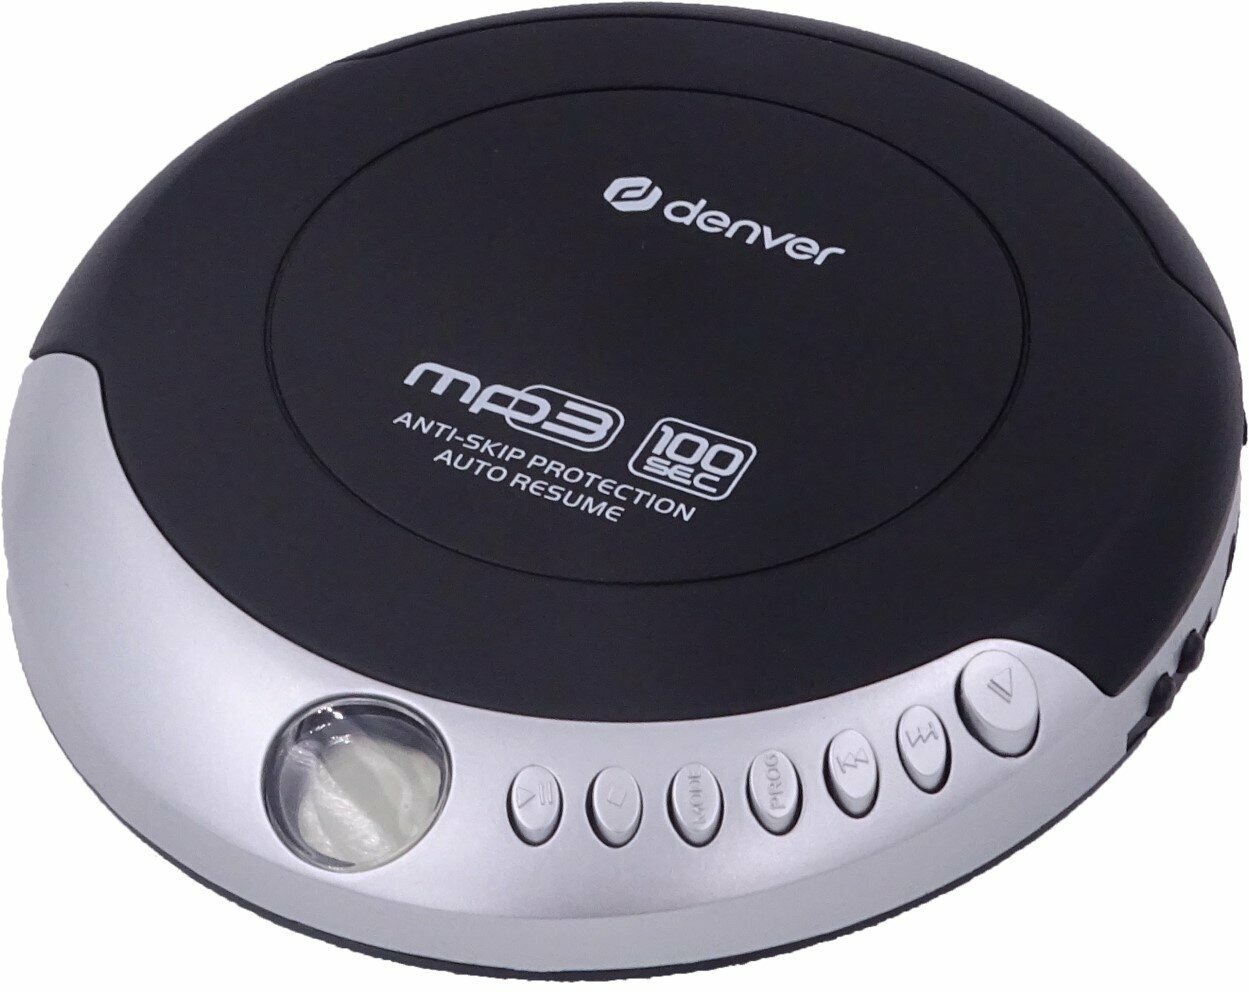 Portable Music Player Denver DMP-391